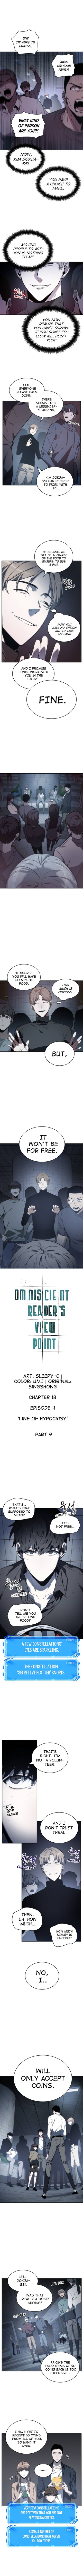 Omniscient Reader's View Manga Manga Chapter - 18 - image 1